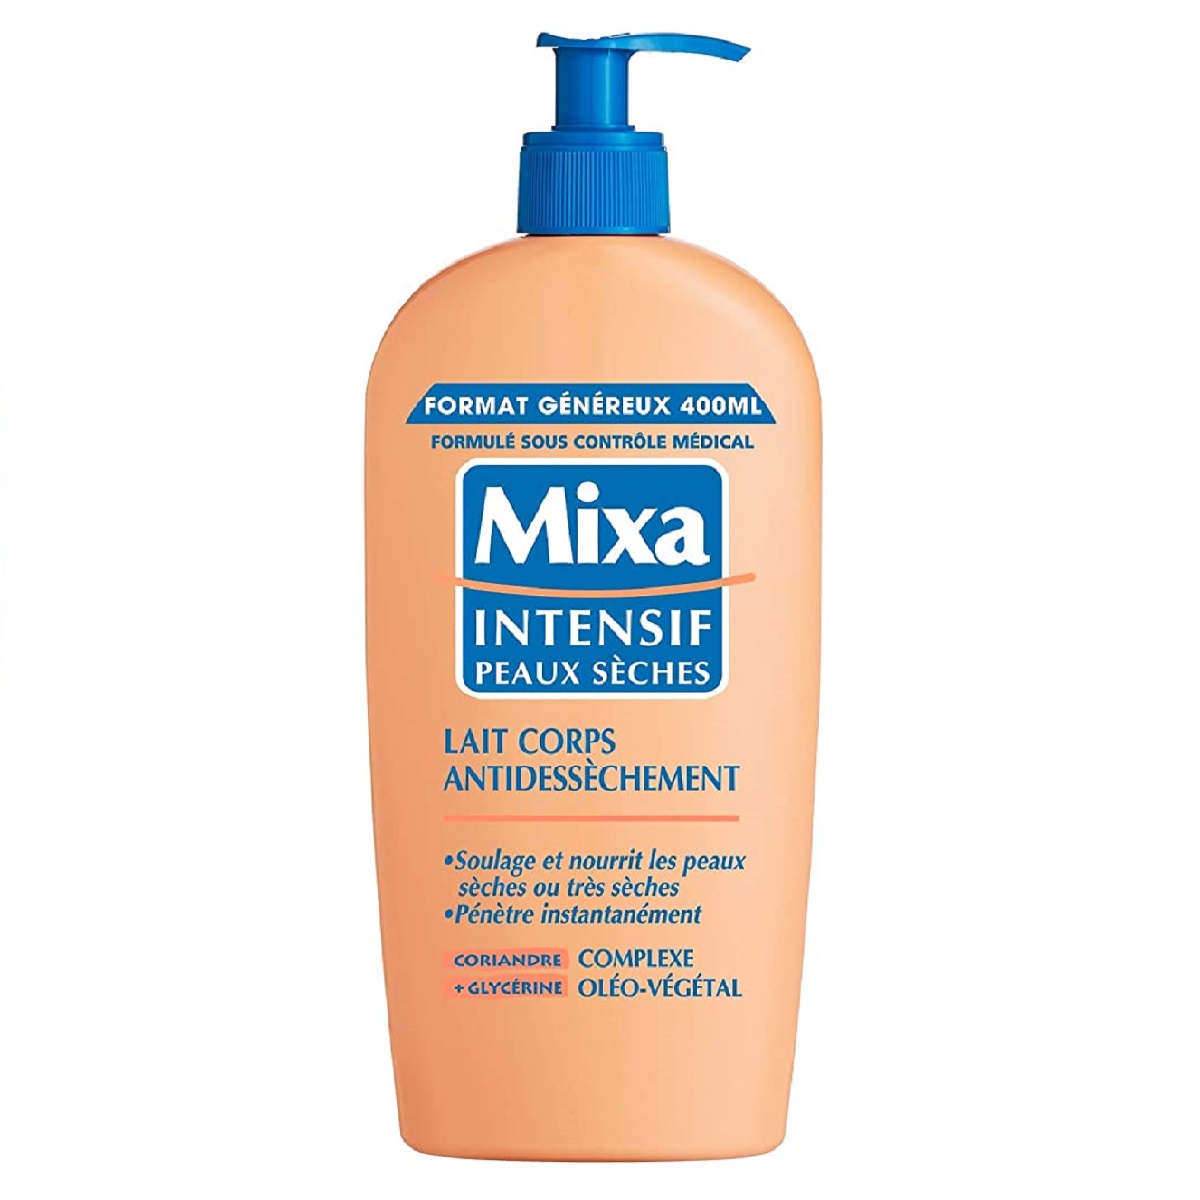 Mixa Intensive anti dry skin 300ml